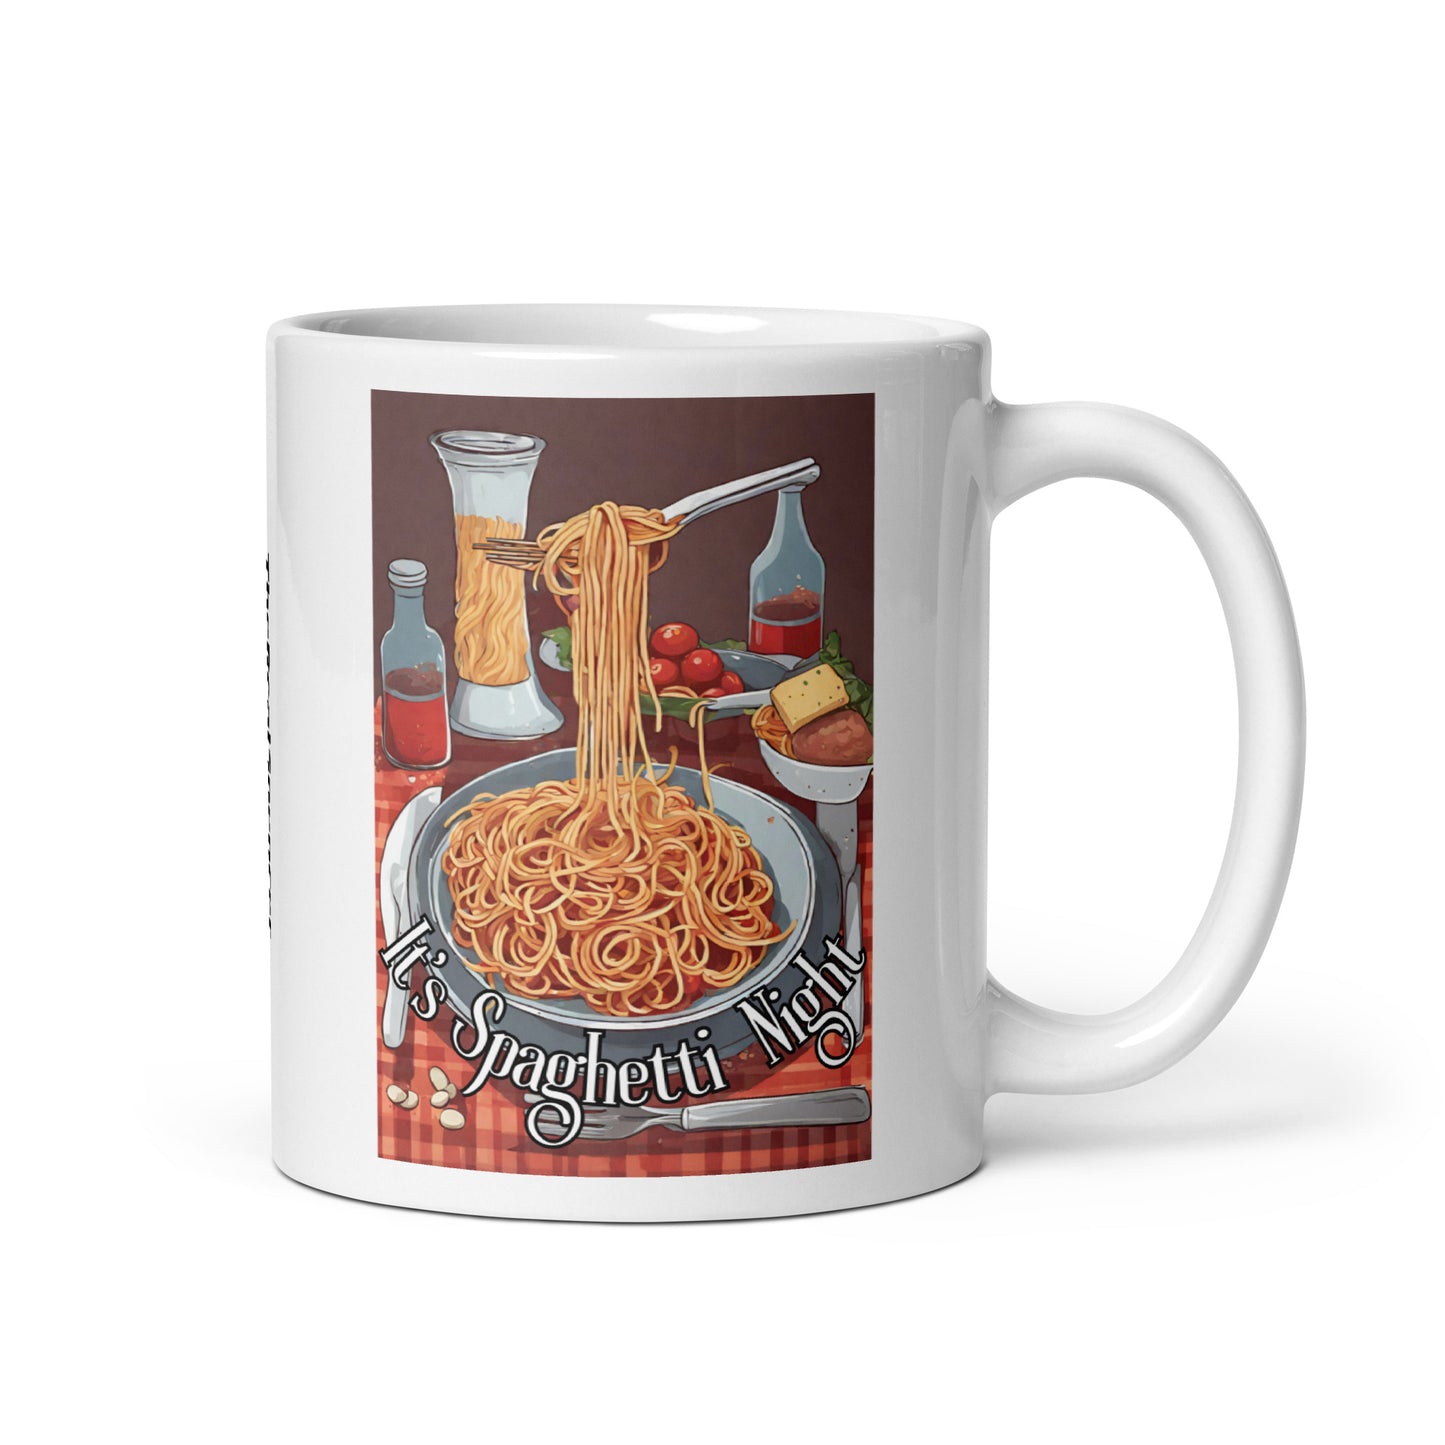 It's Spaghetti Night Mug